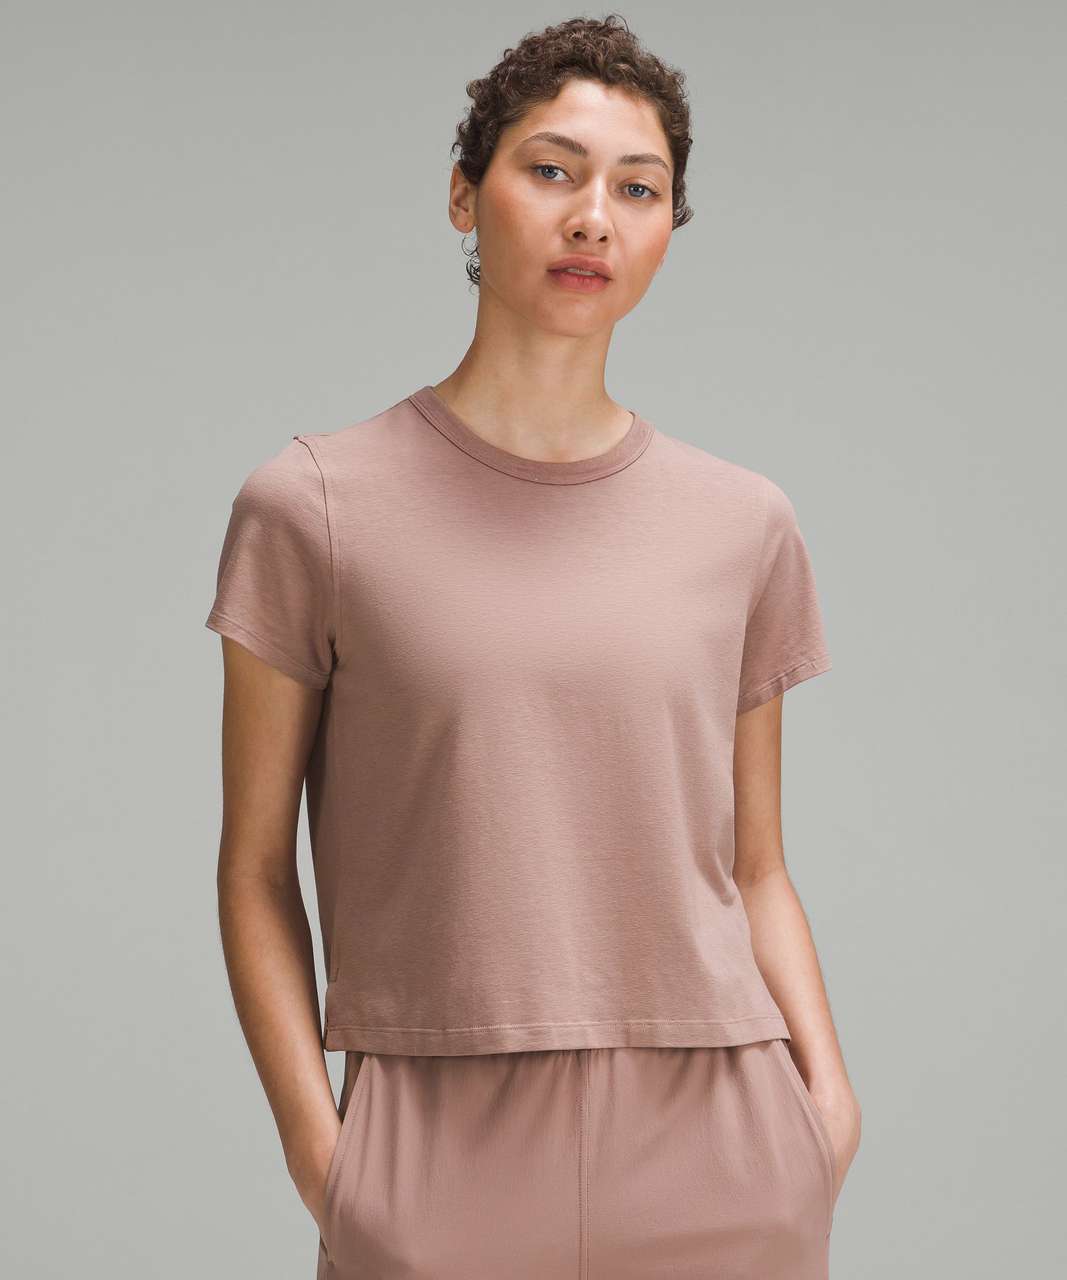 Uniqlo Shirt Womens Medium Peach Short Sleeve Crew Neck Pullover T Shirt